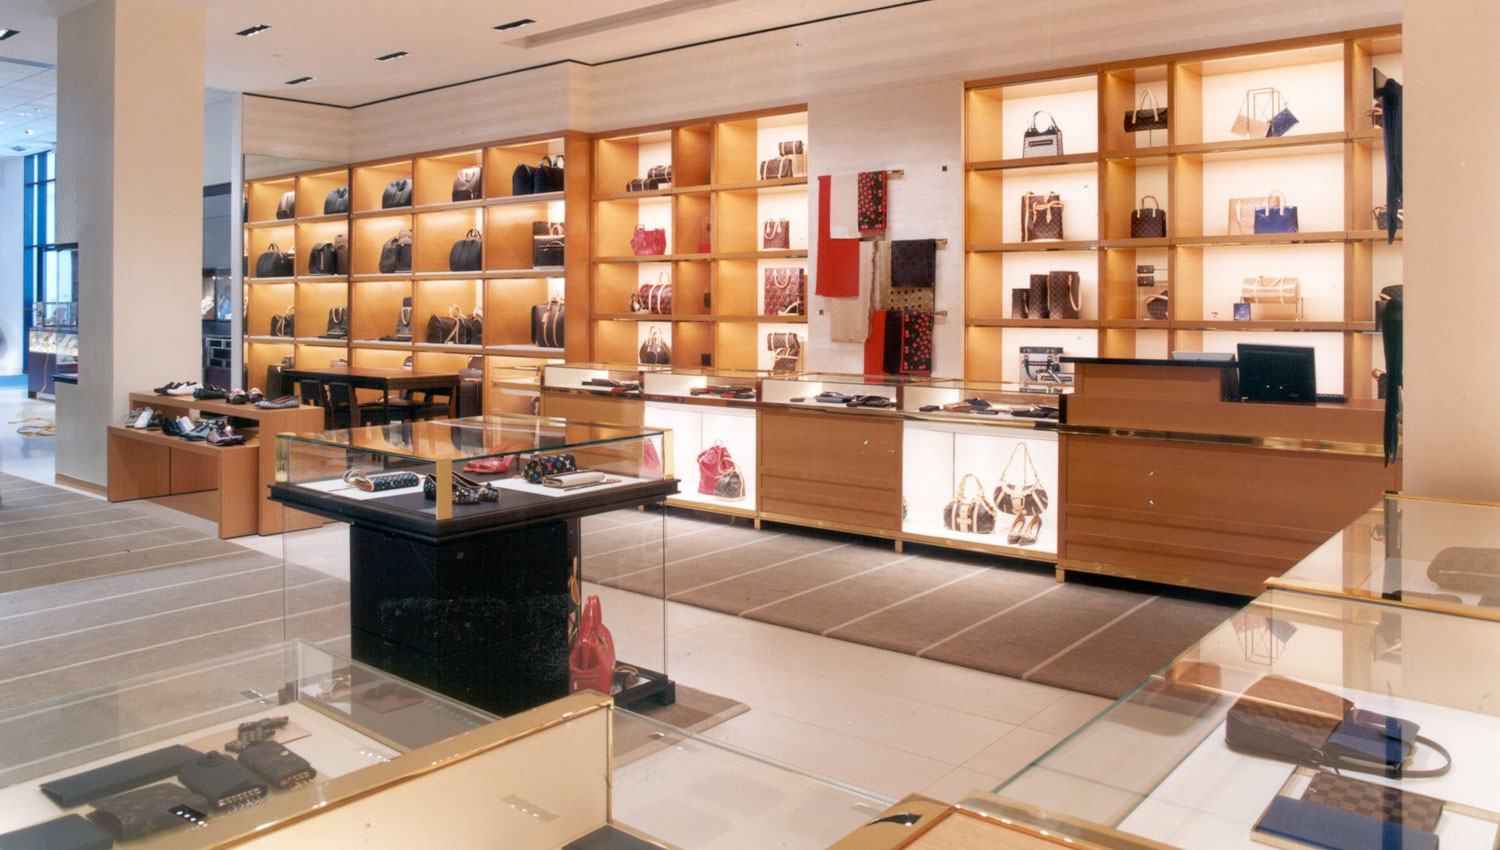 Neiman Marcus Louis Vuitton Tysons Galleria | MSU Program Evaluation